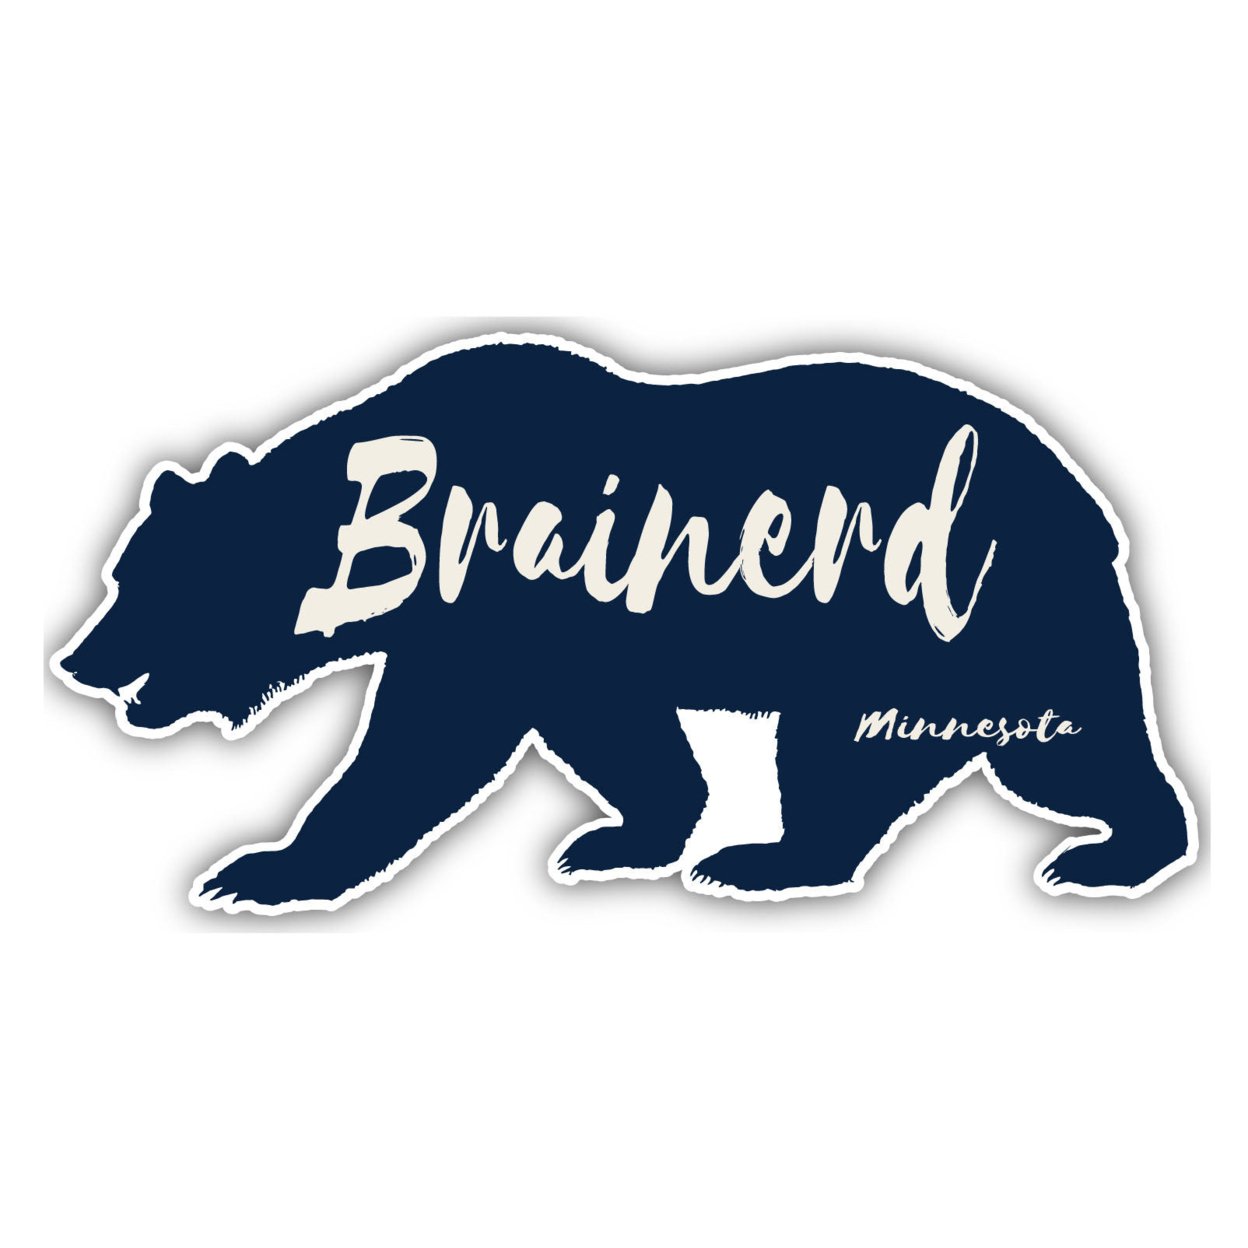 Brainerd Minnesota Souvenir Decorative Stickers (Choose Theme And Size) - Single Unit, 6-Inch, Camp Life